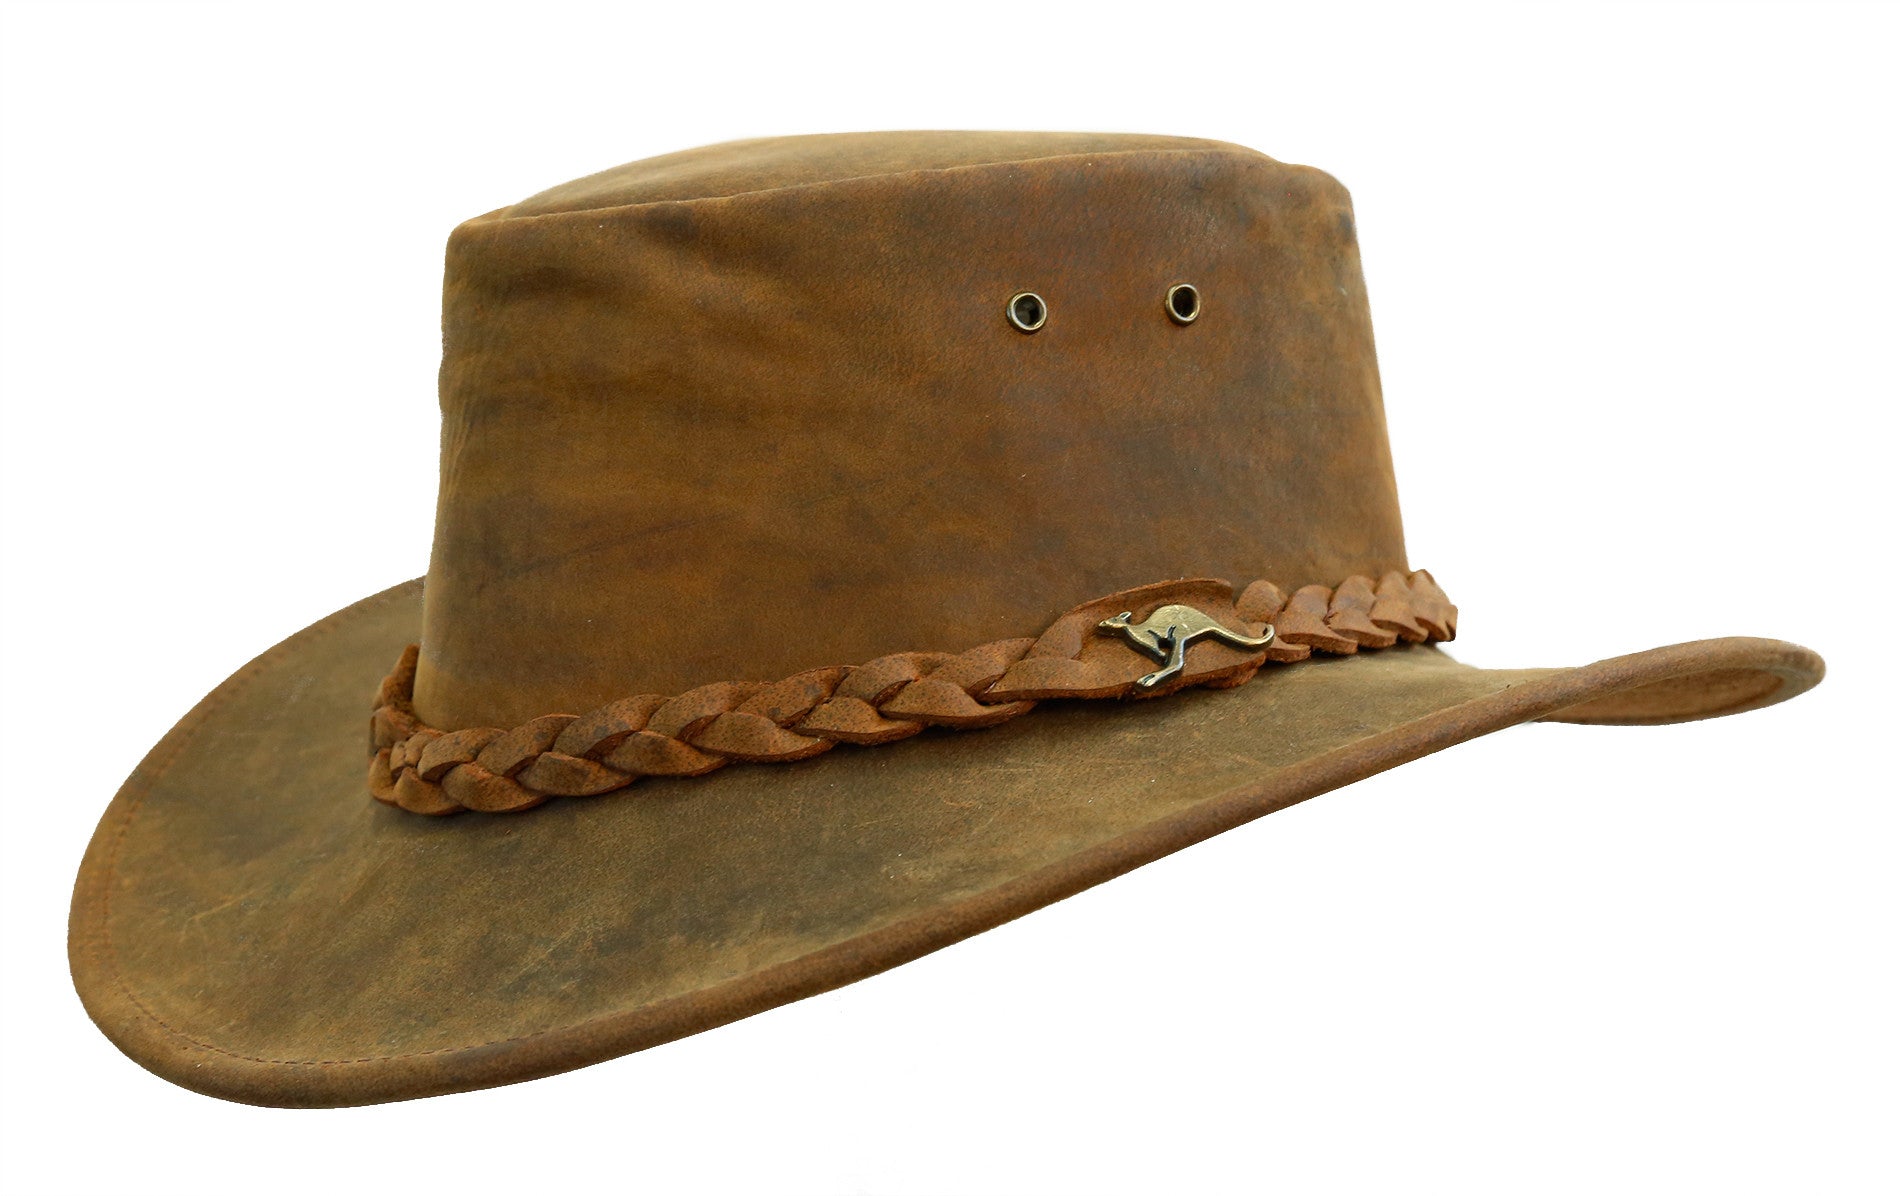 Nullarbor Hat in Tobacco - Kakadu Traders Australia